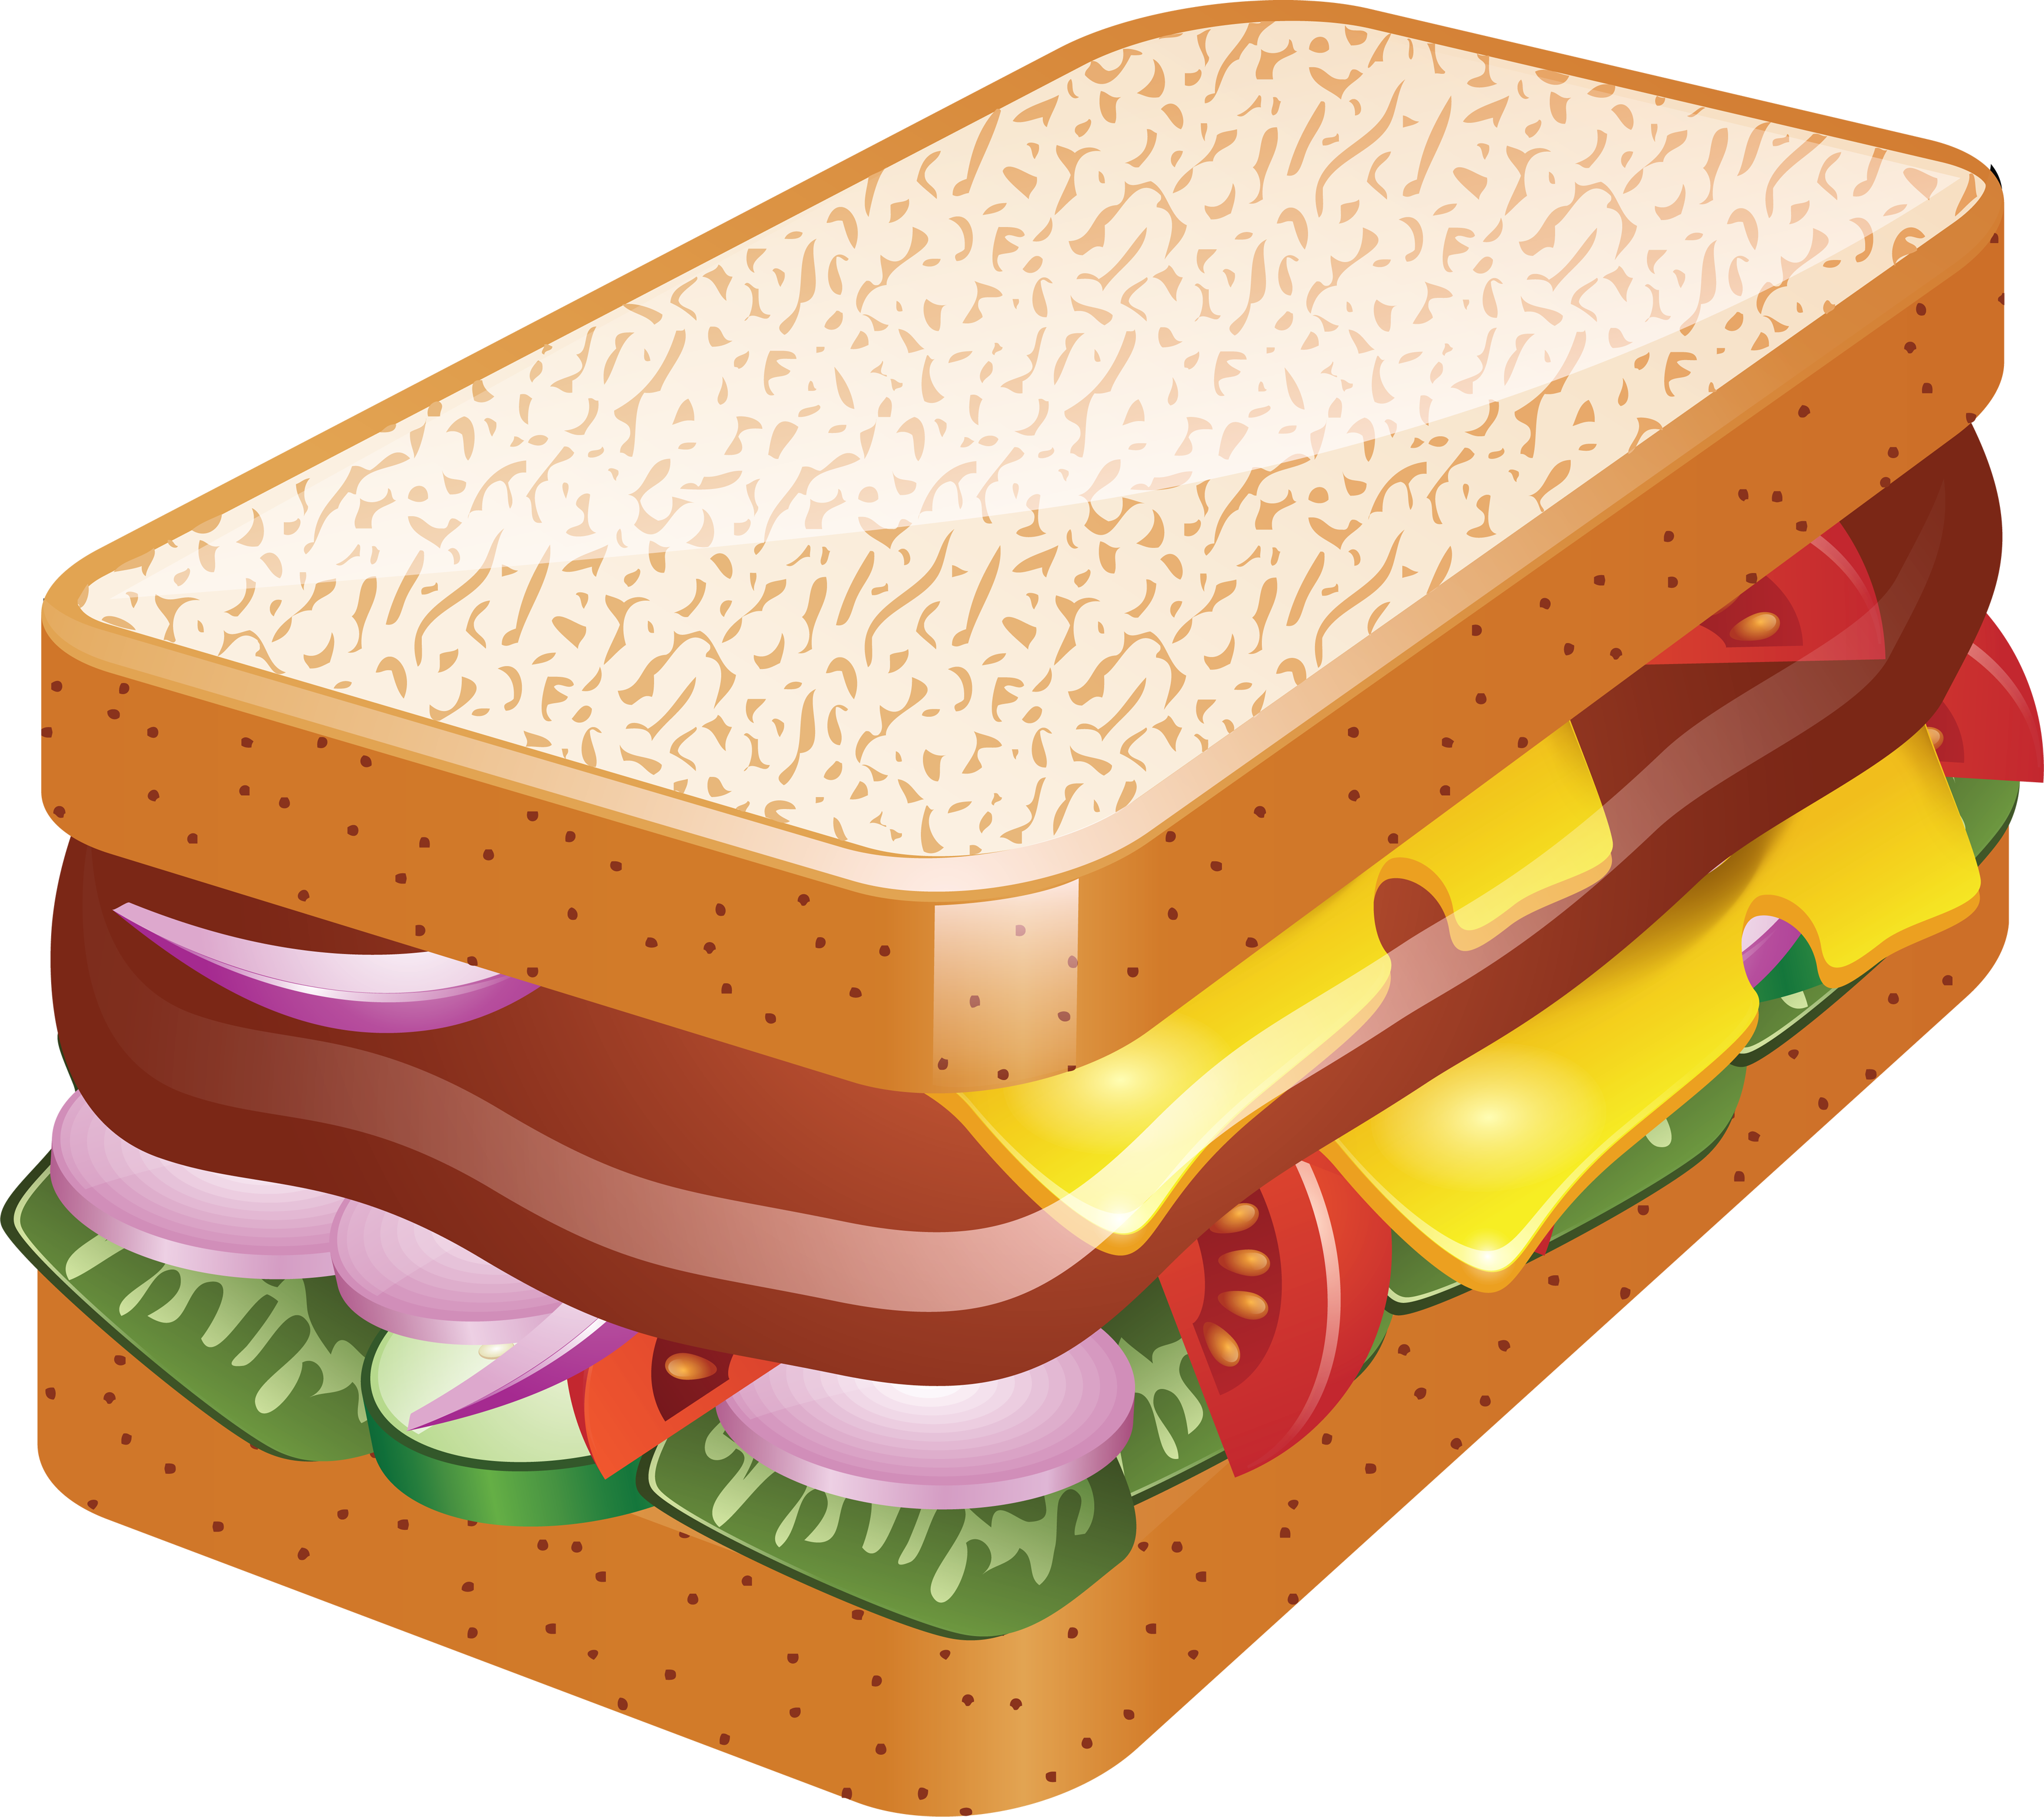 sandwich clipart